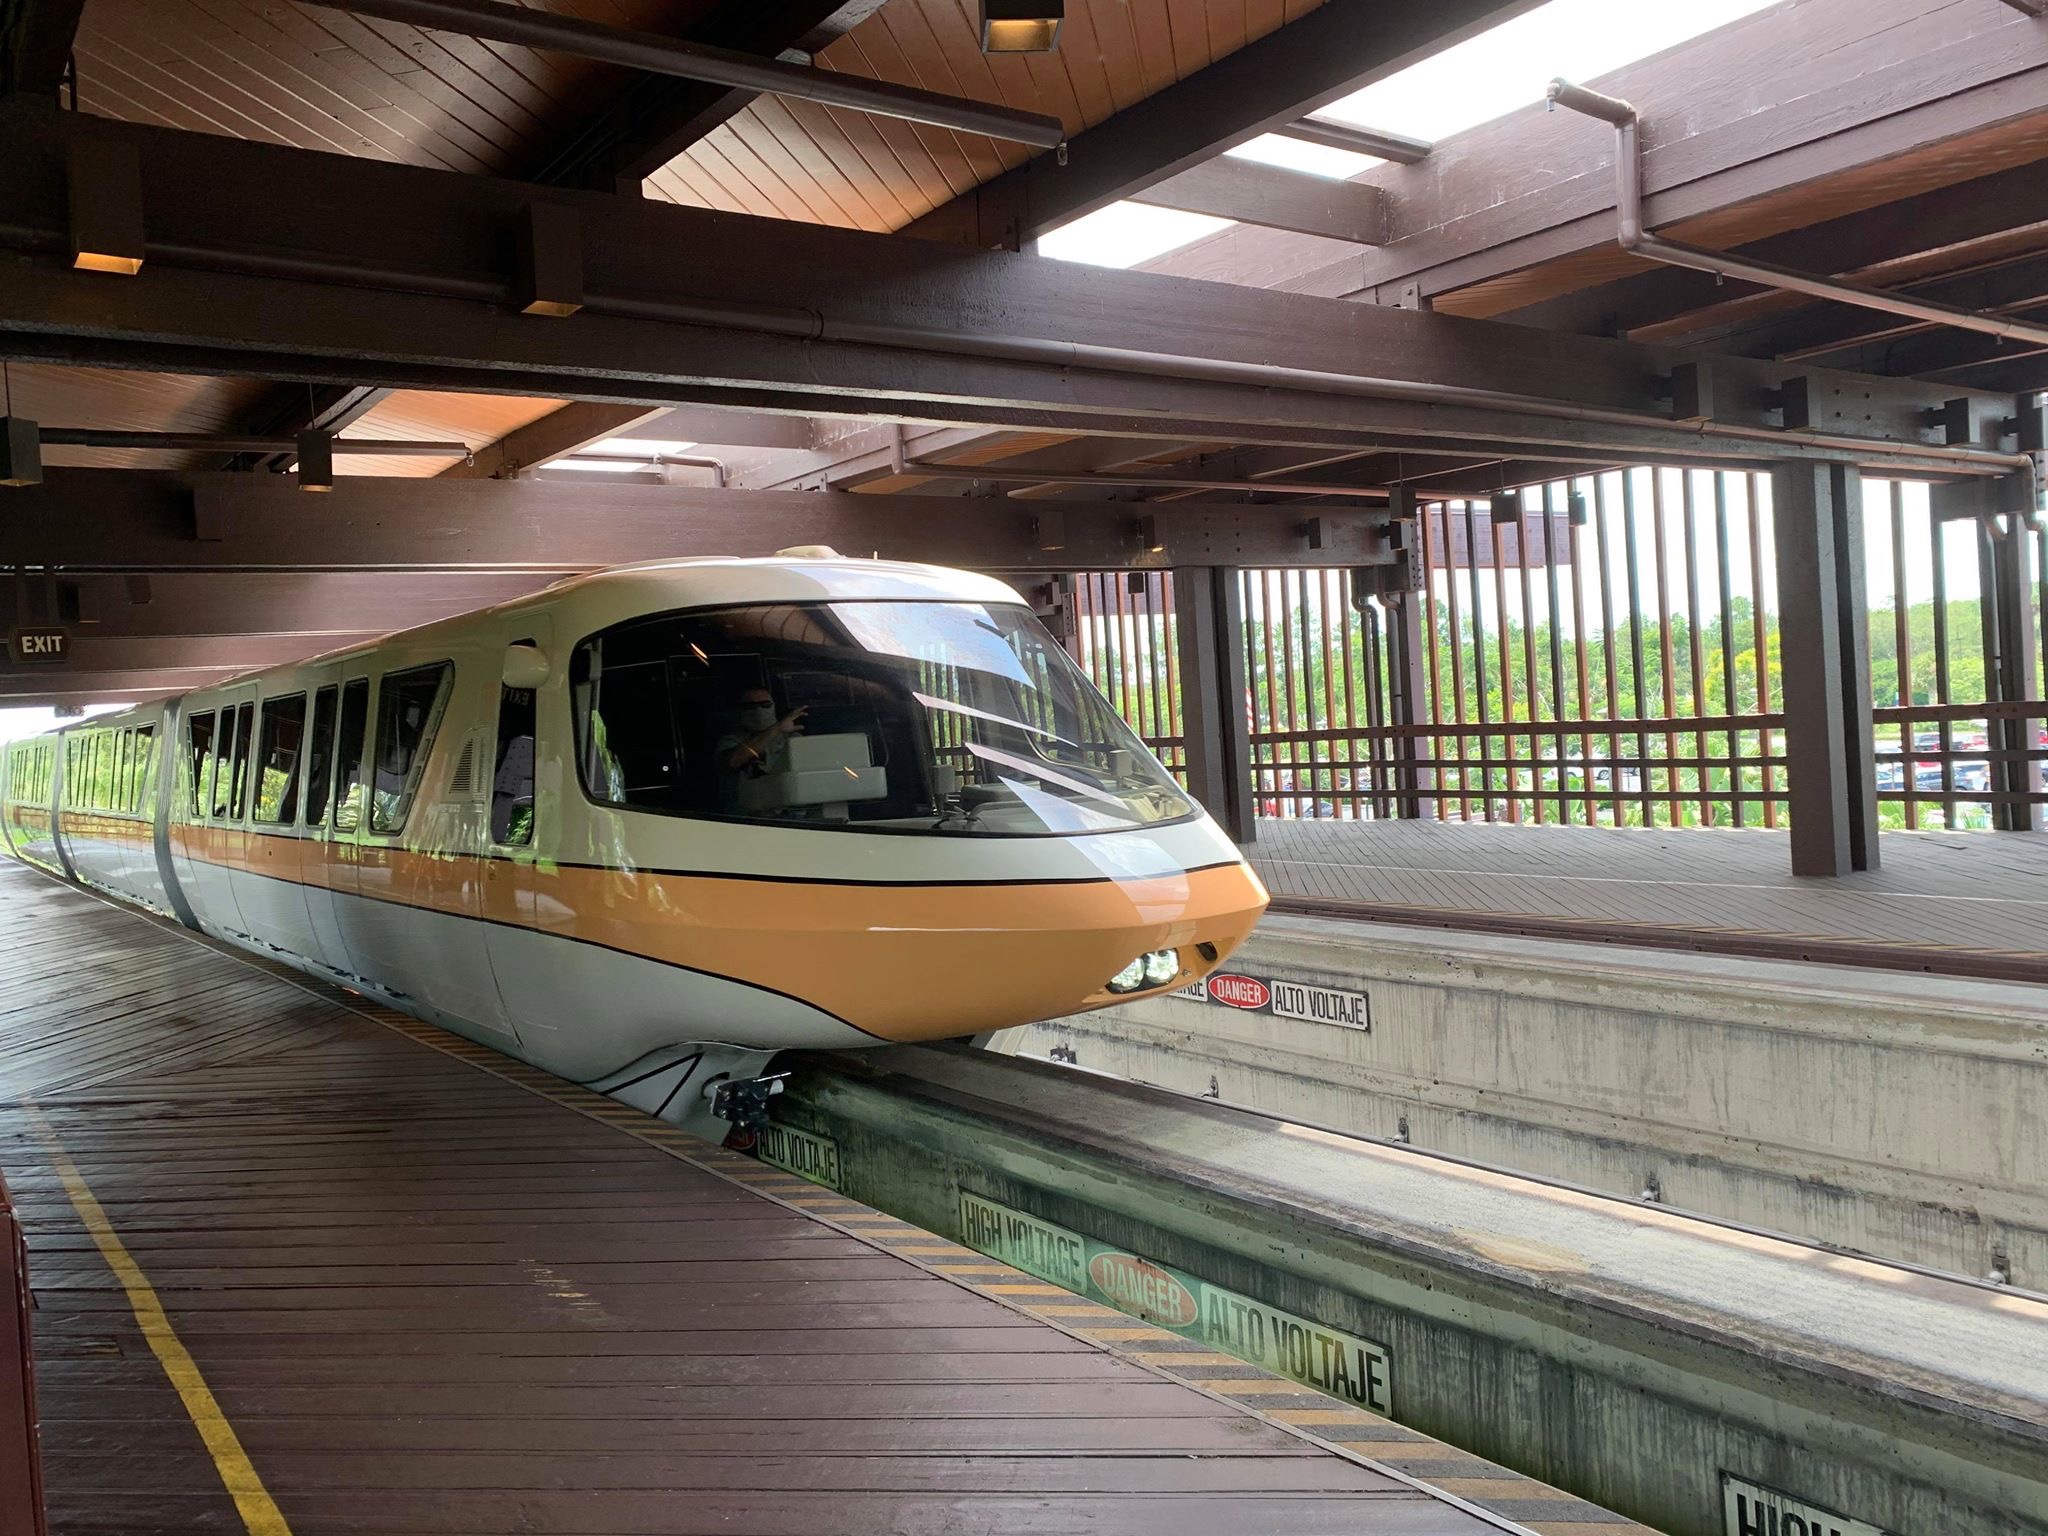 New Monorail Peach Debuts At Walt Disney World!